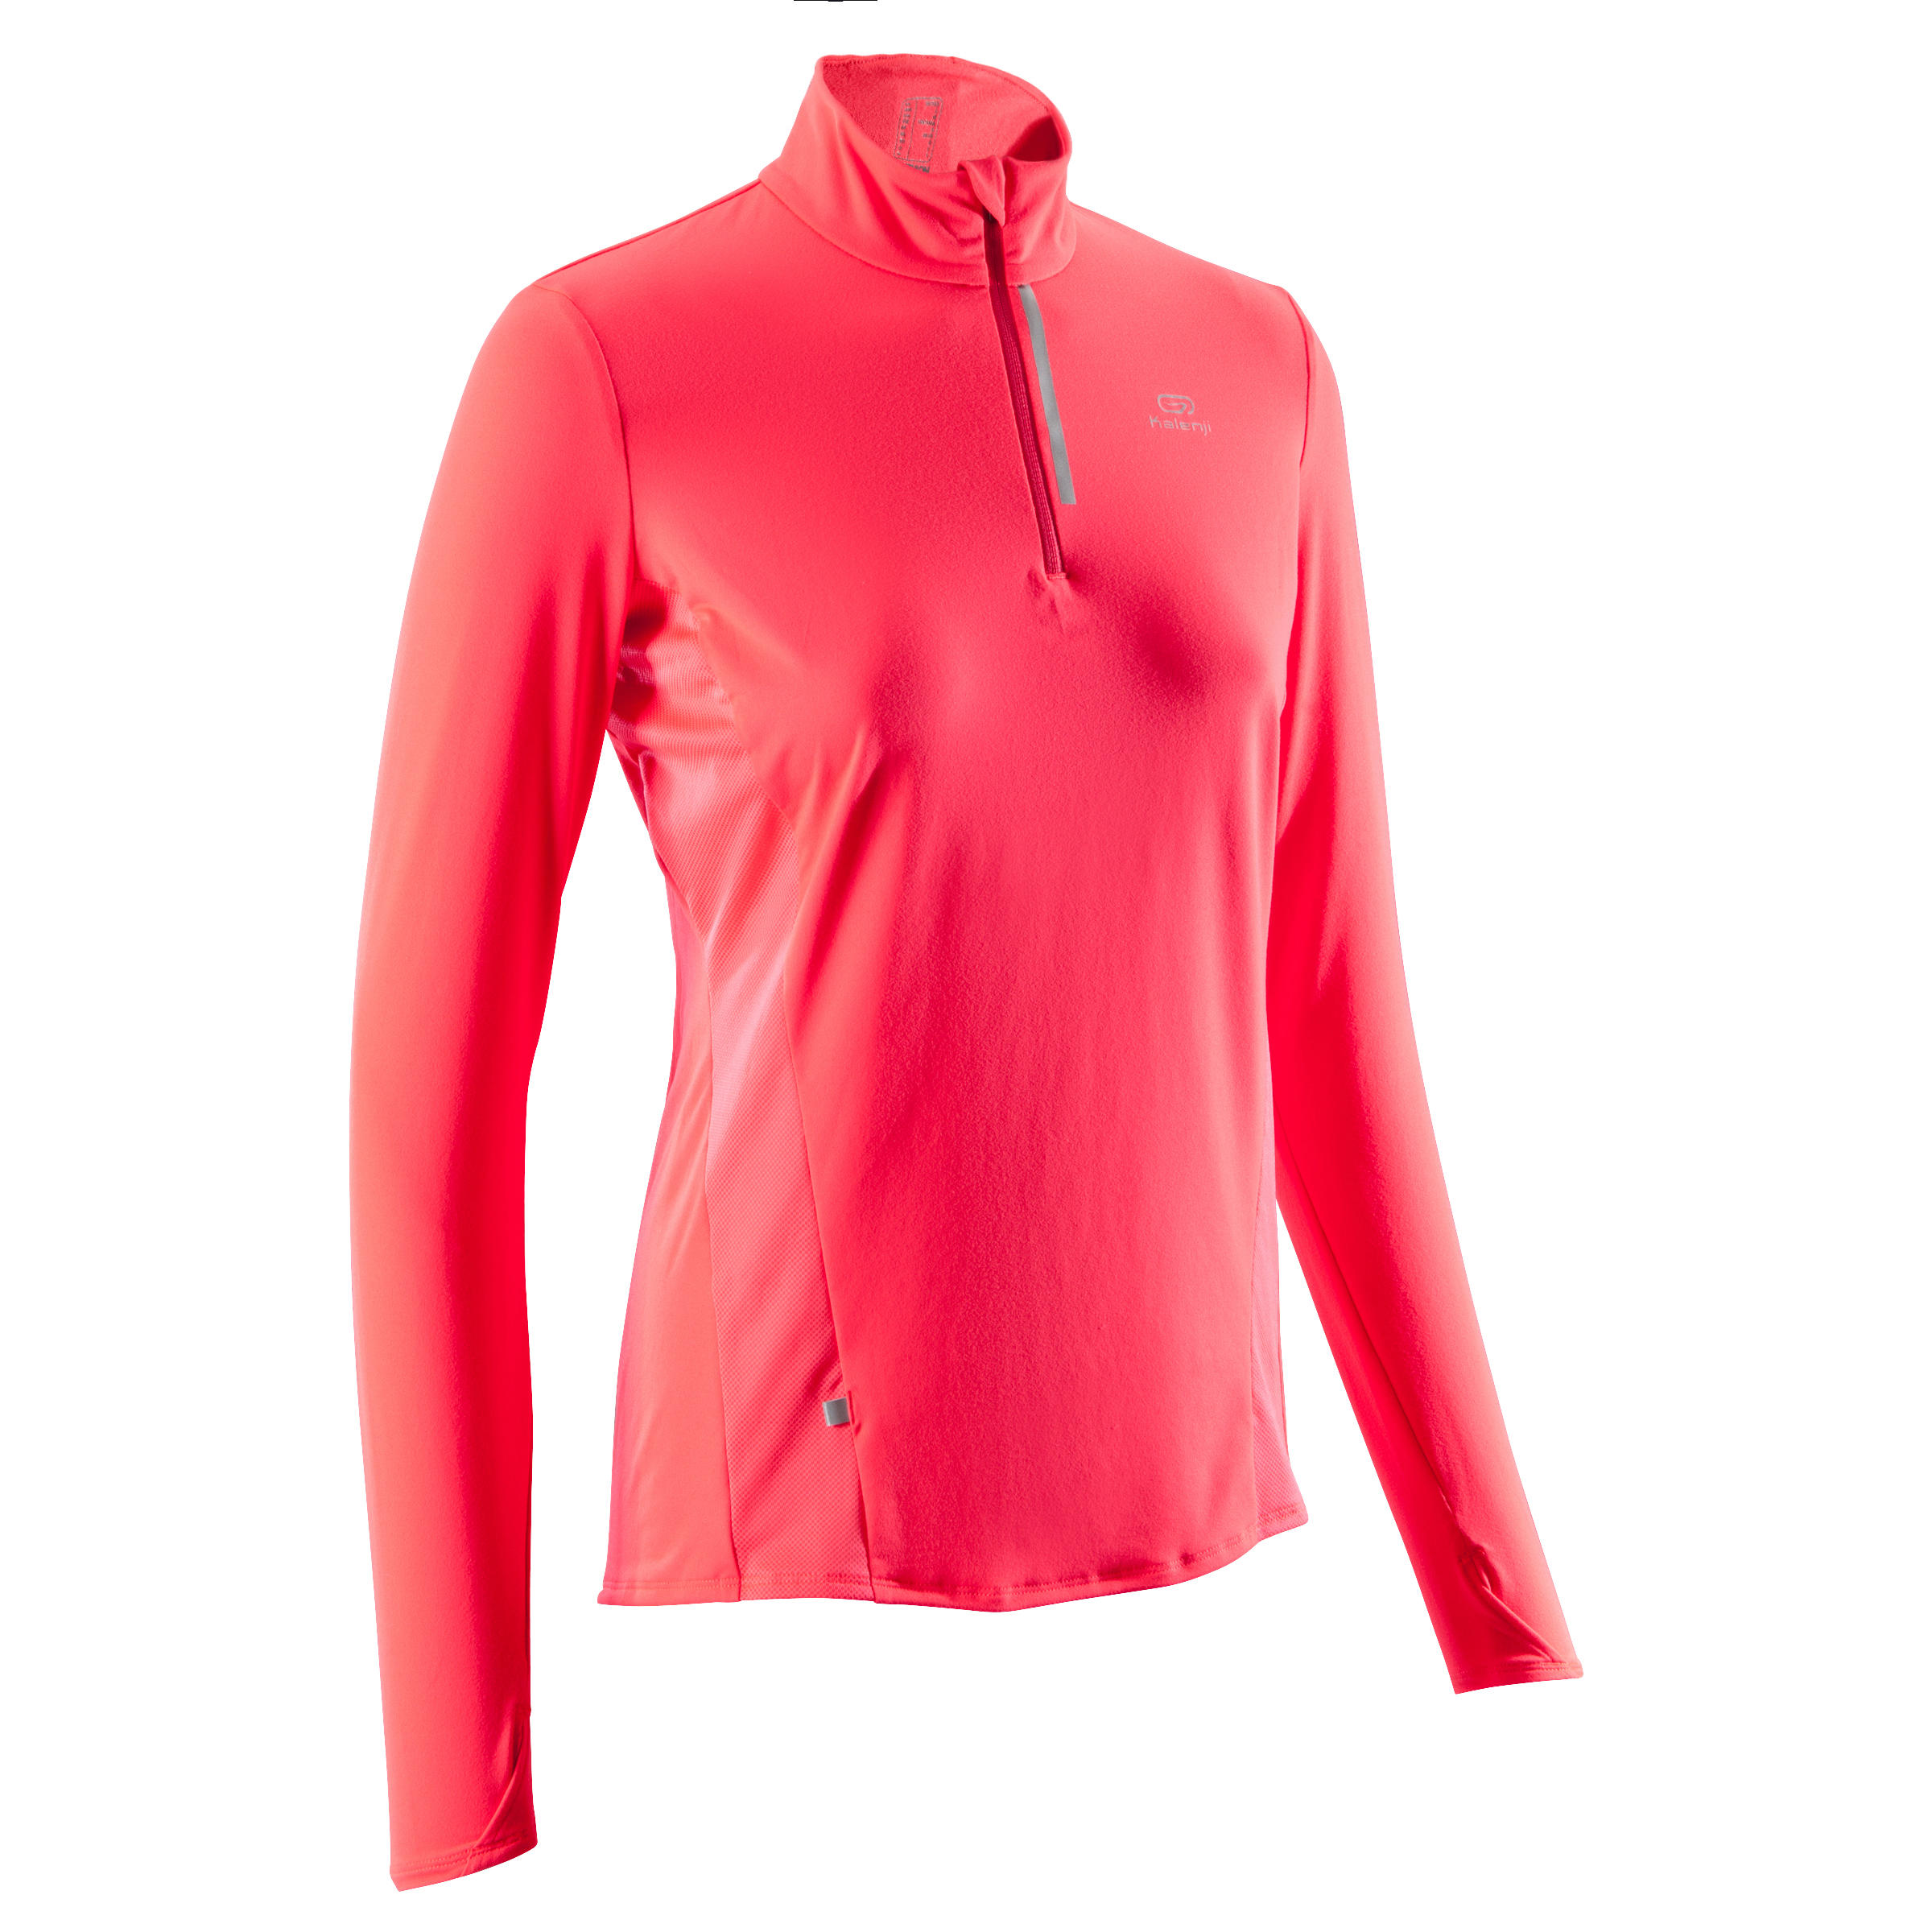 KALENJI Women's Running ½-Zip Long-Sleeved T-Shirt Dry+ - pink